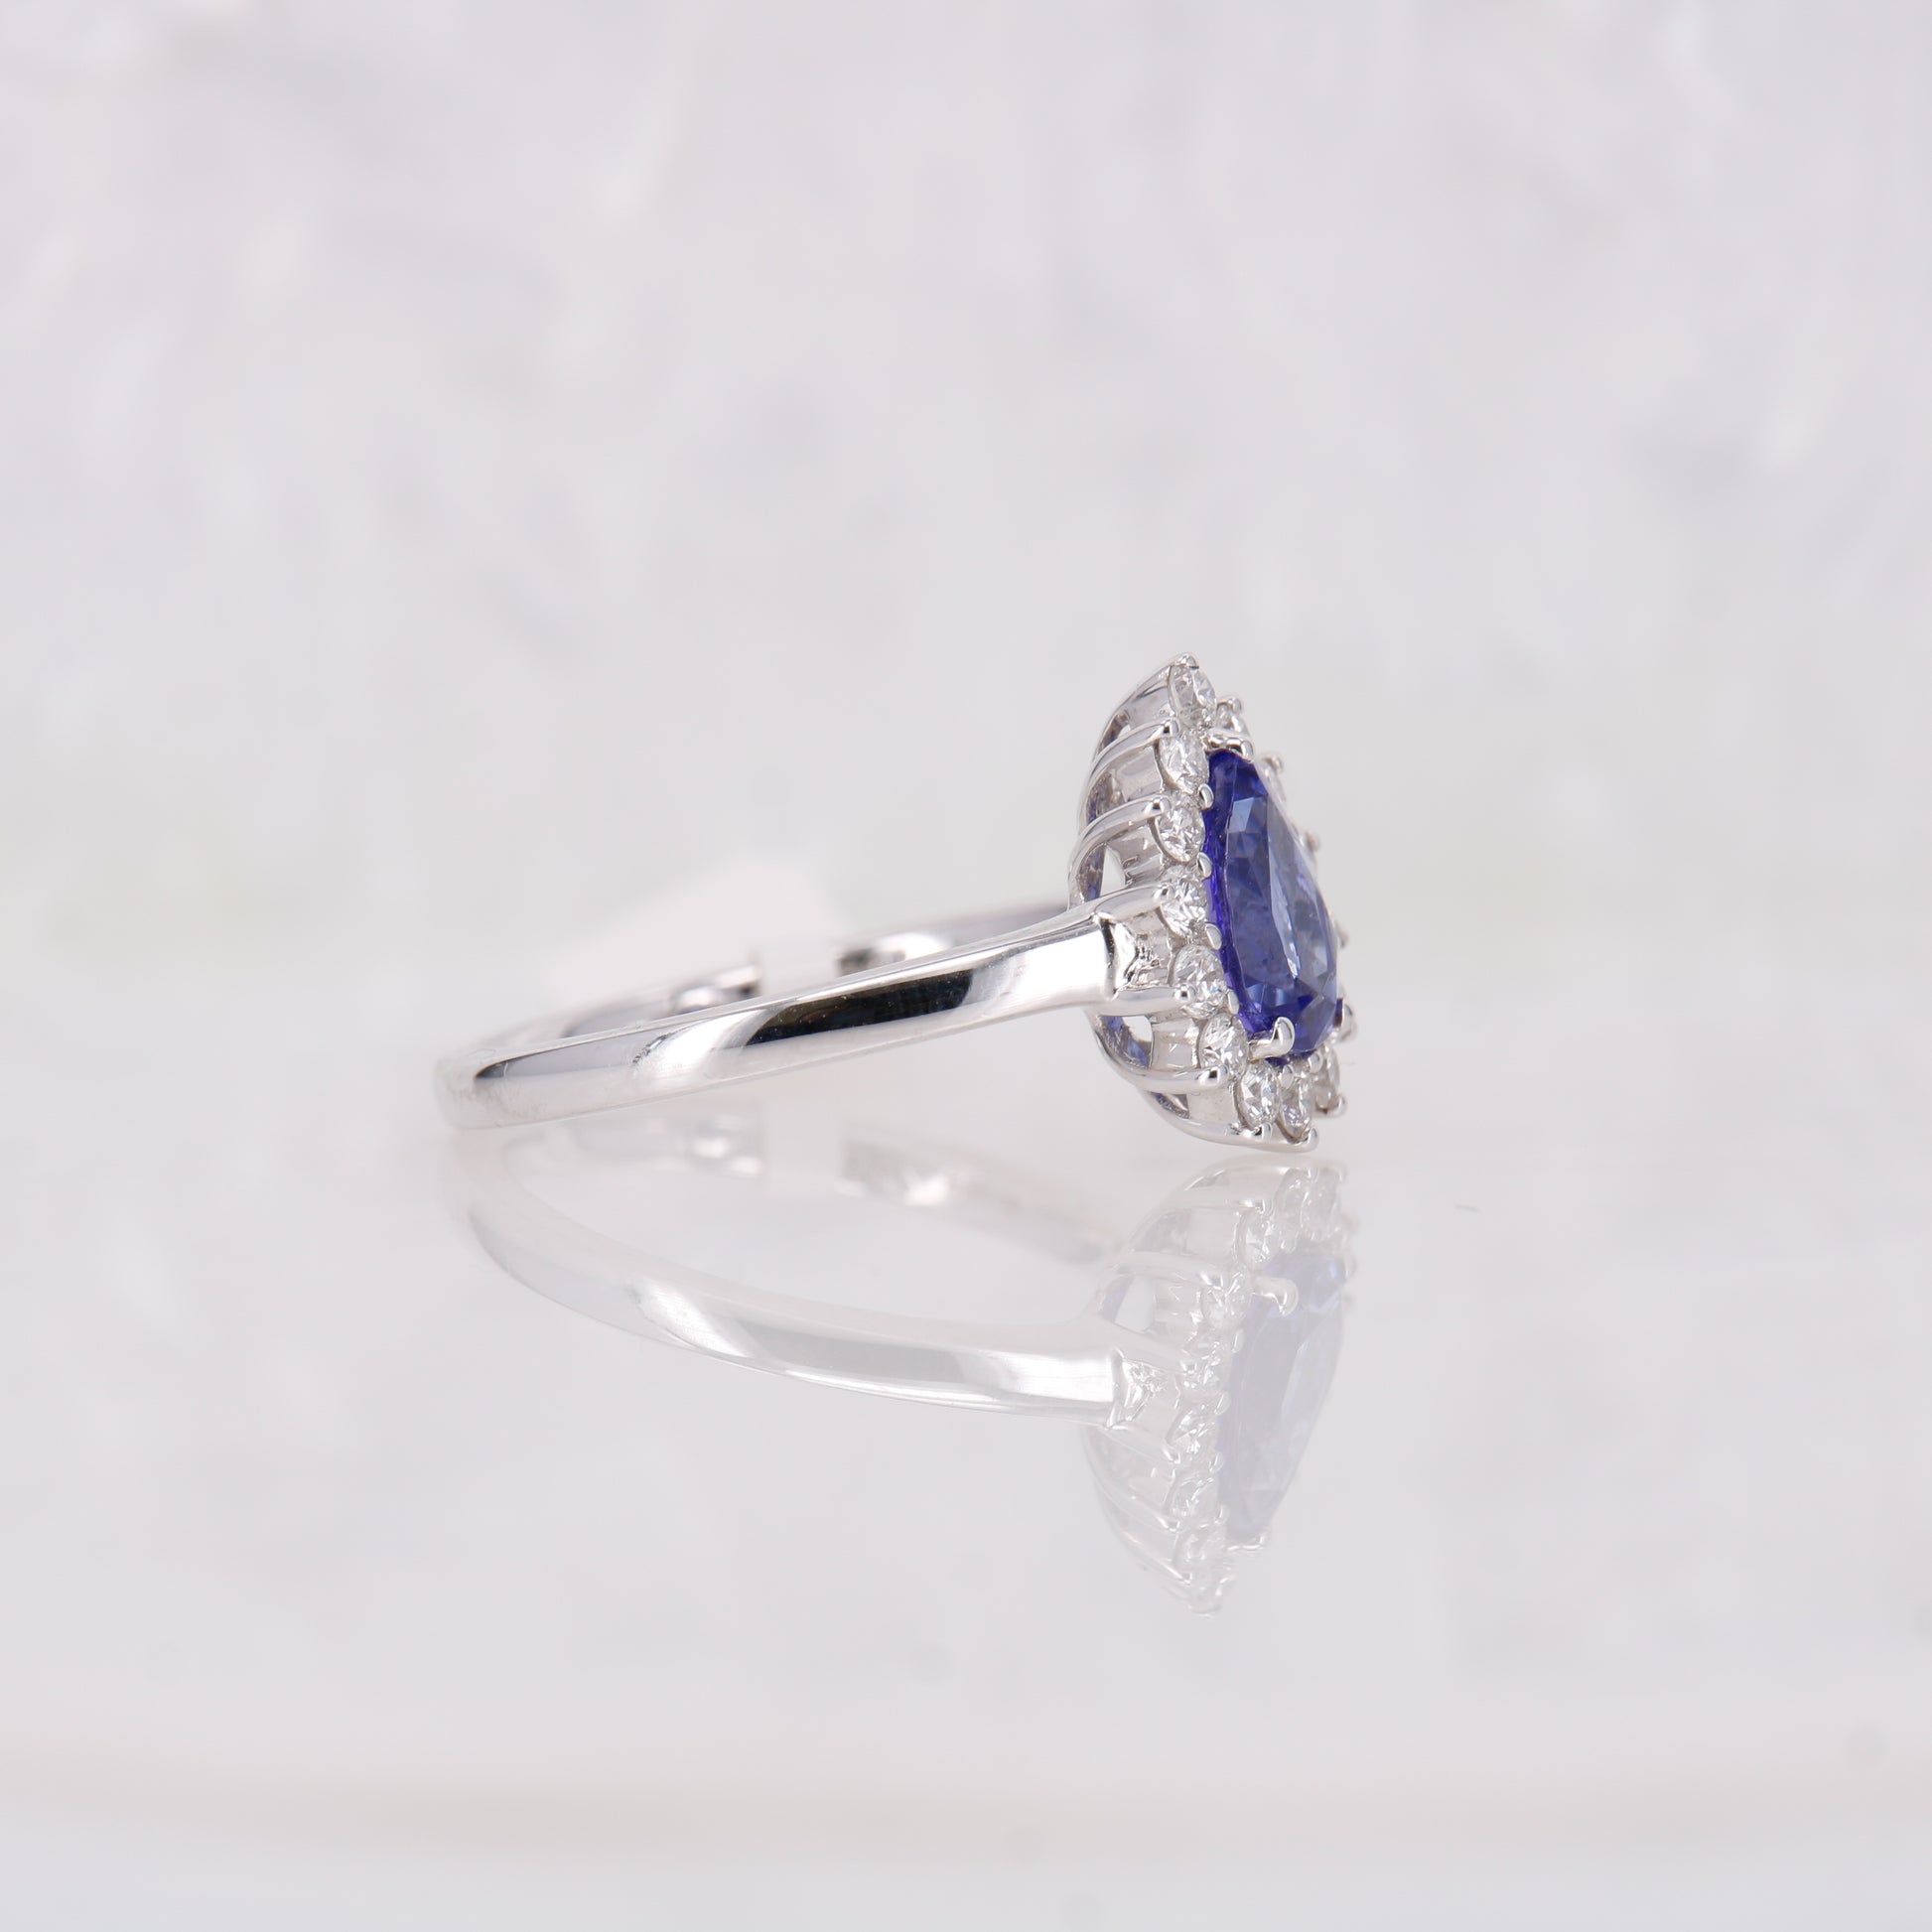 Tanzanite and Diamond Ring. Showcasing a captivating 1.32ct pear-cut deep blue tanzanite encircled by a halo of shimmering diamonds